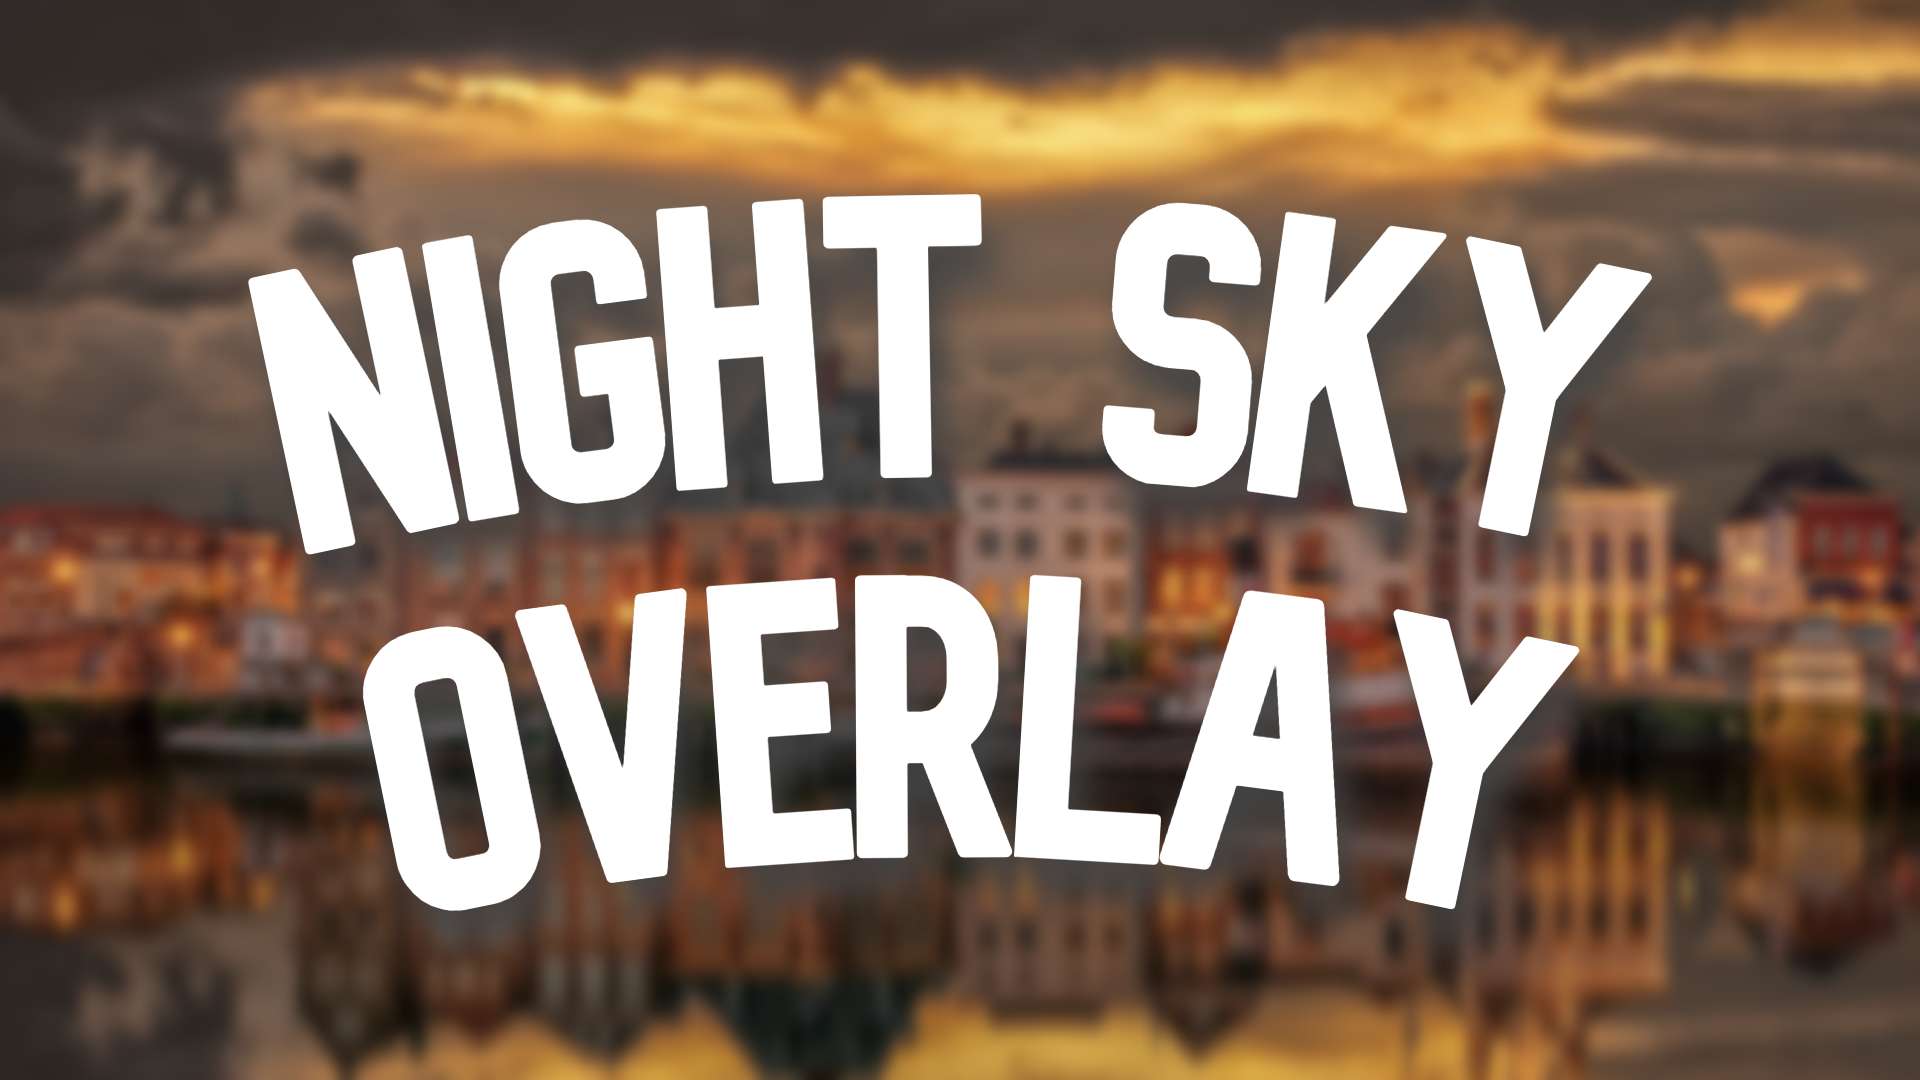 Night Sky Overlay #11 16x by rh56 on PvPRP